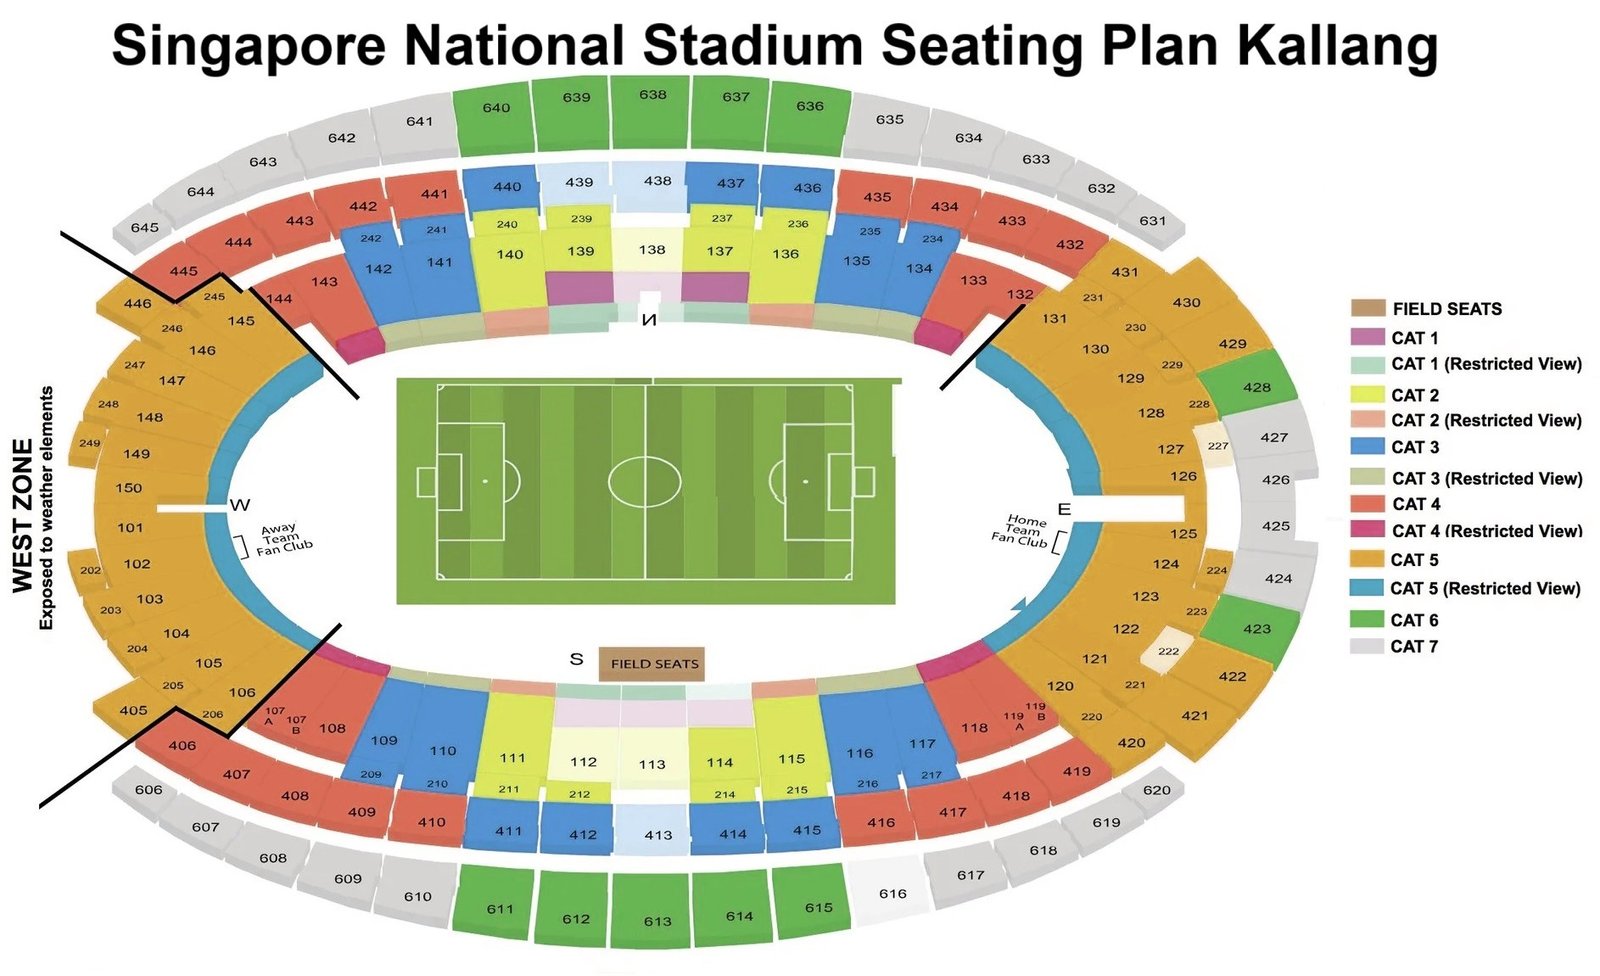 Singapore National Stadium Seating Plan with seat numbers